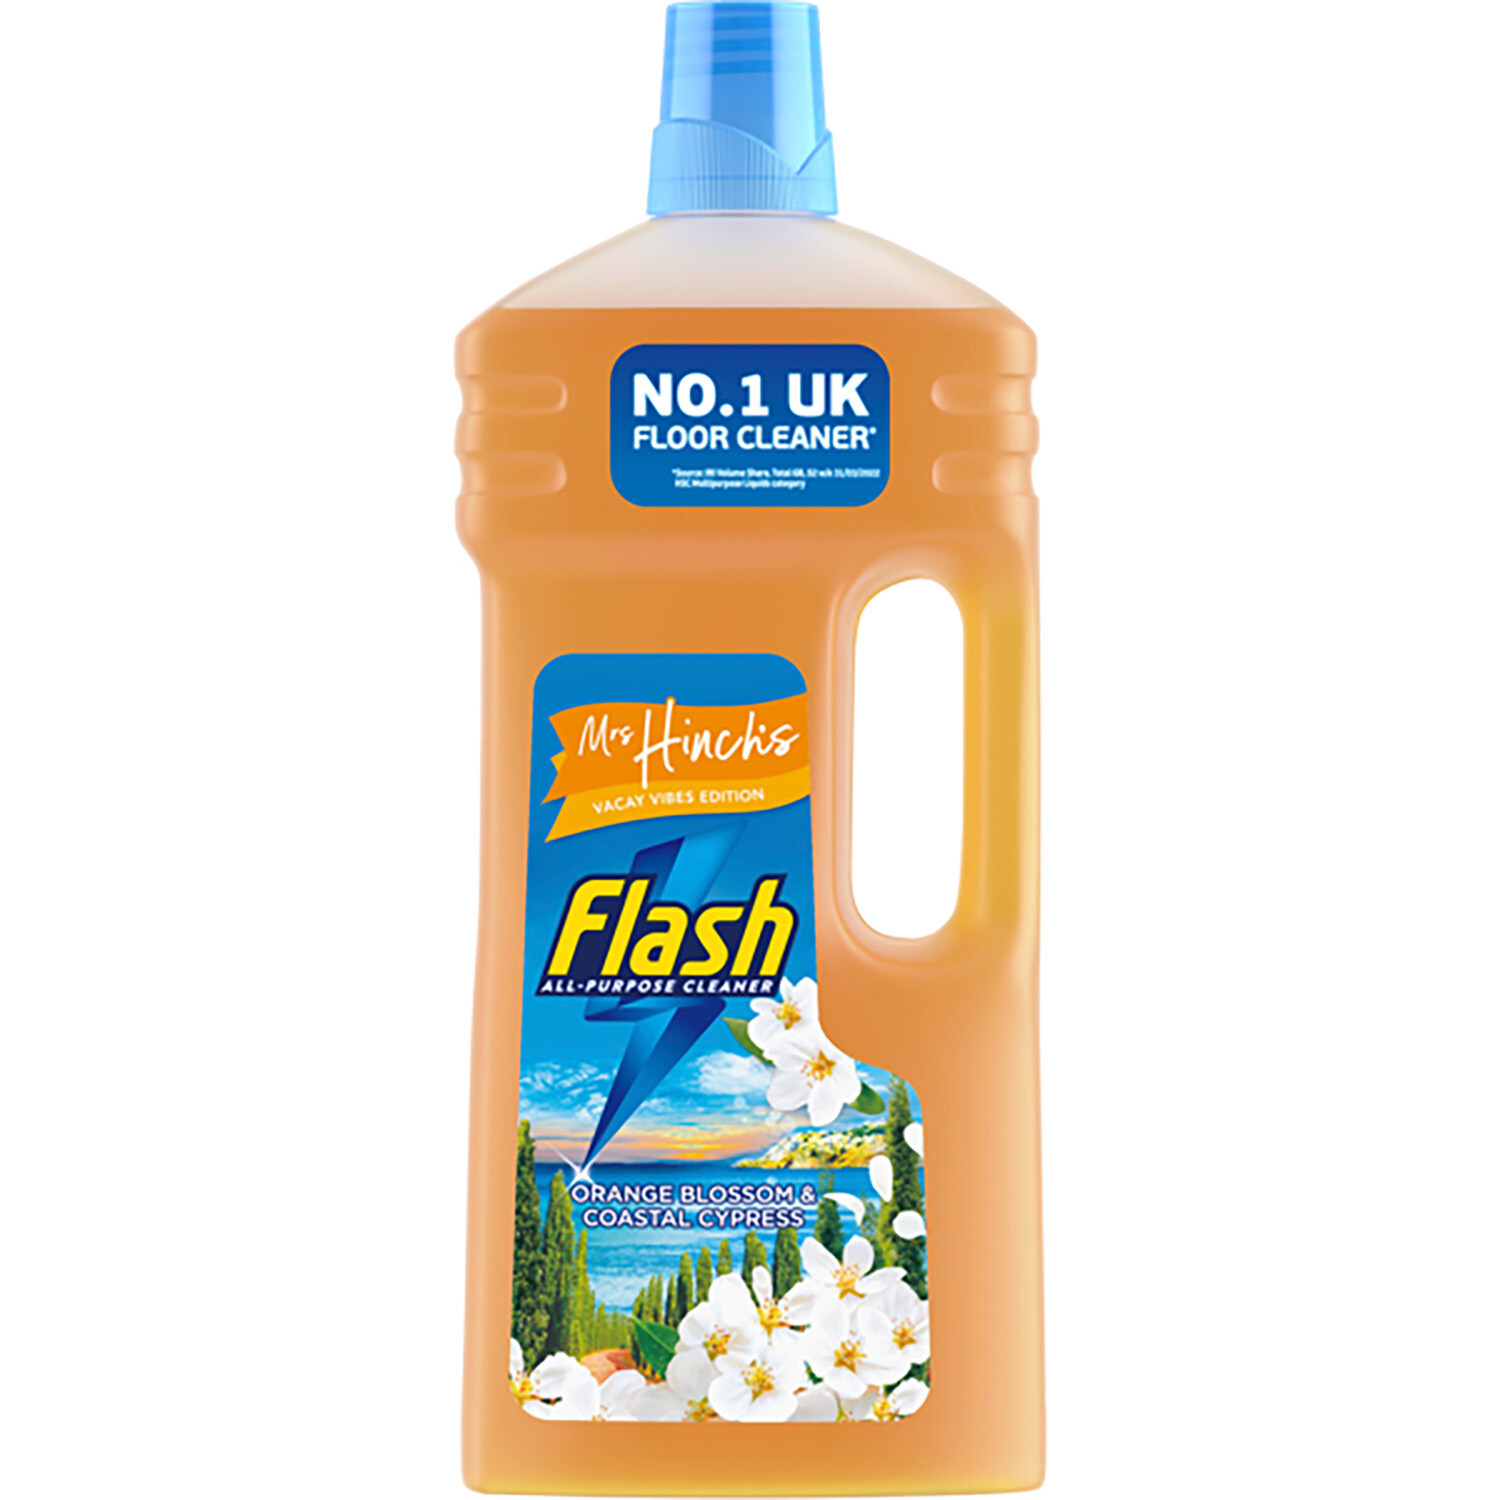 Flash All Purpose Liquid - 1.5l / Orange Blossom and Coastal Cypress Image